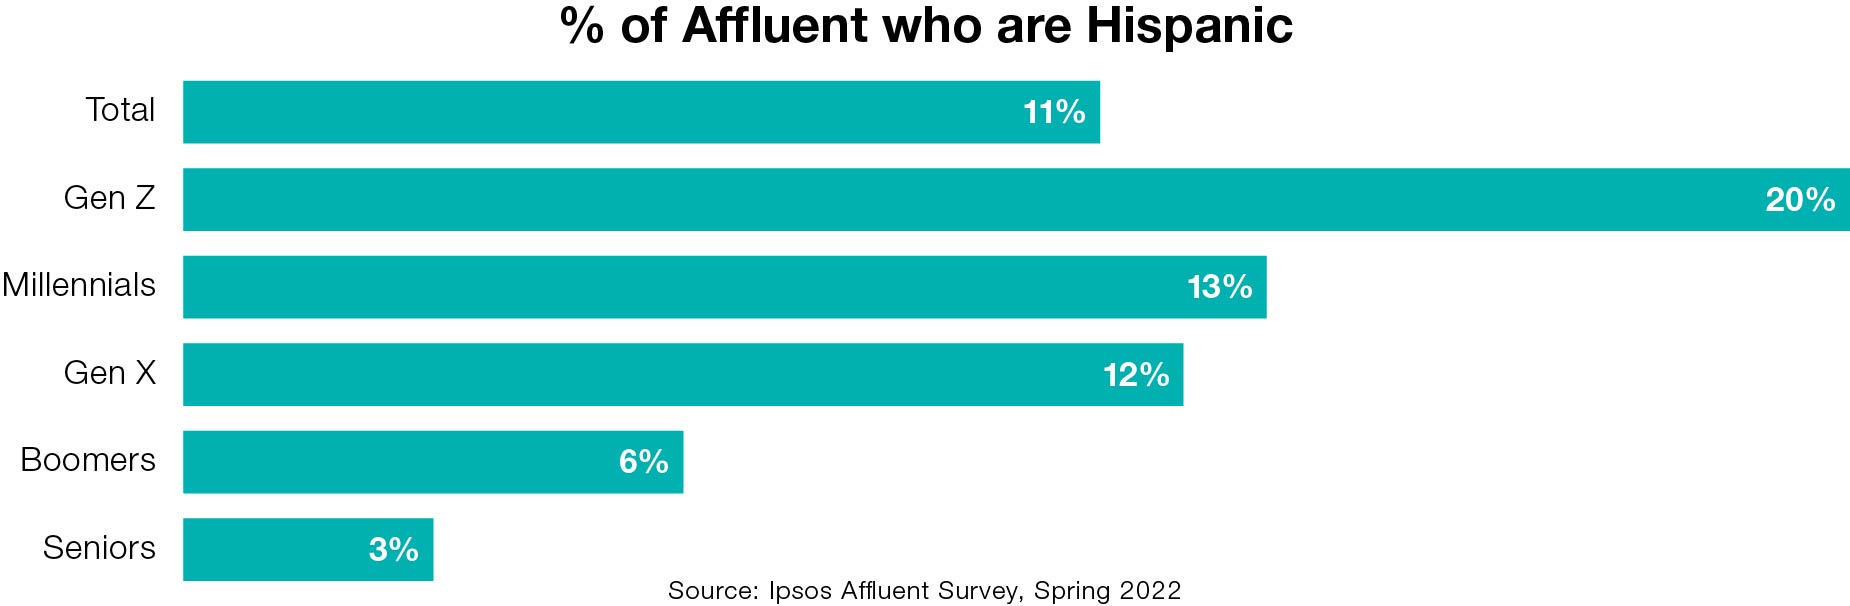 Percent of Affluent who are Hispanic